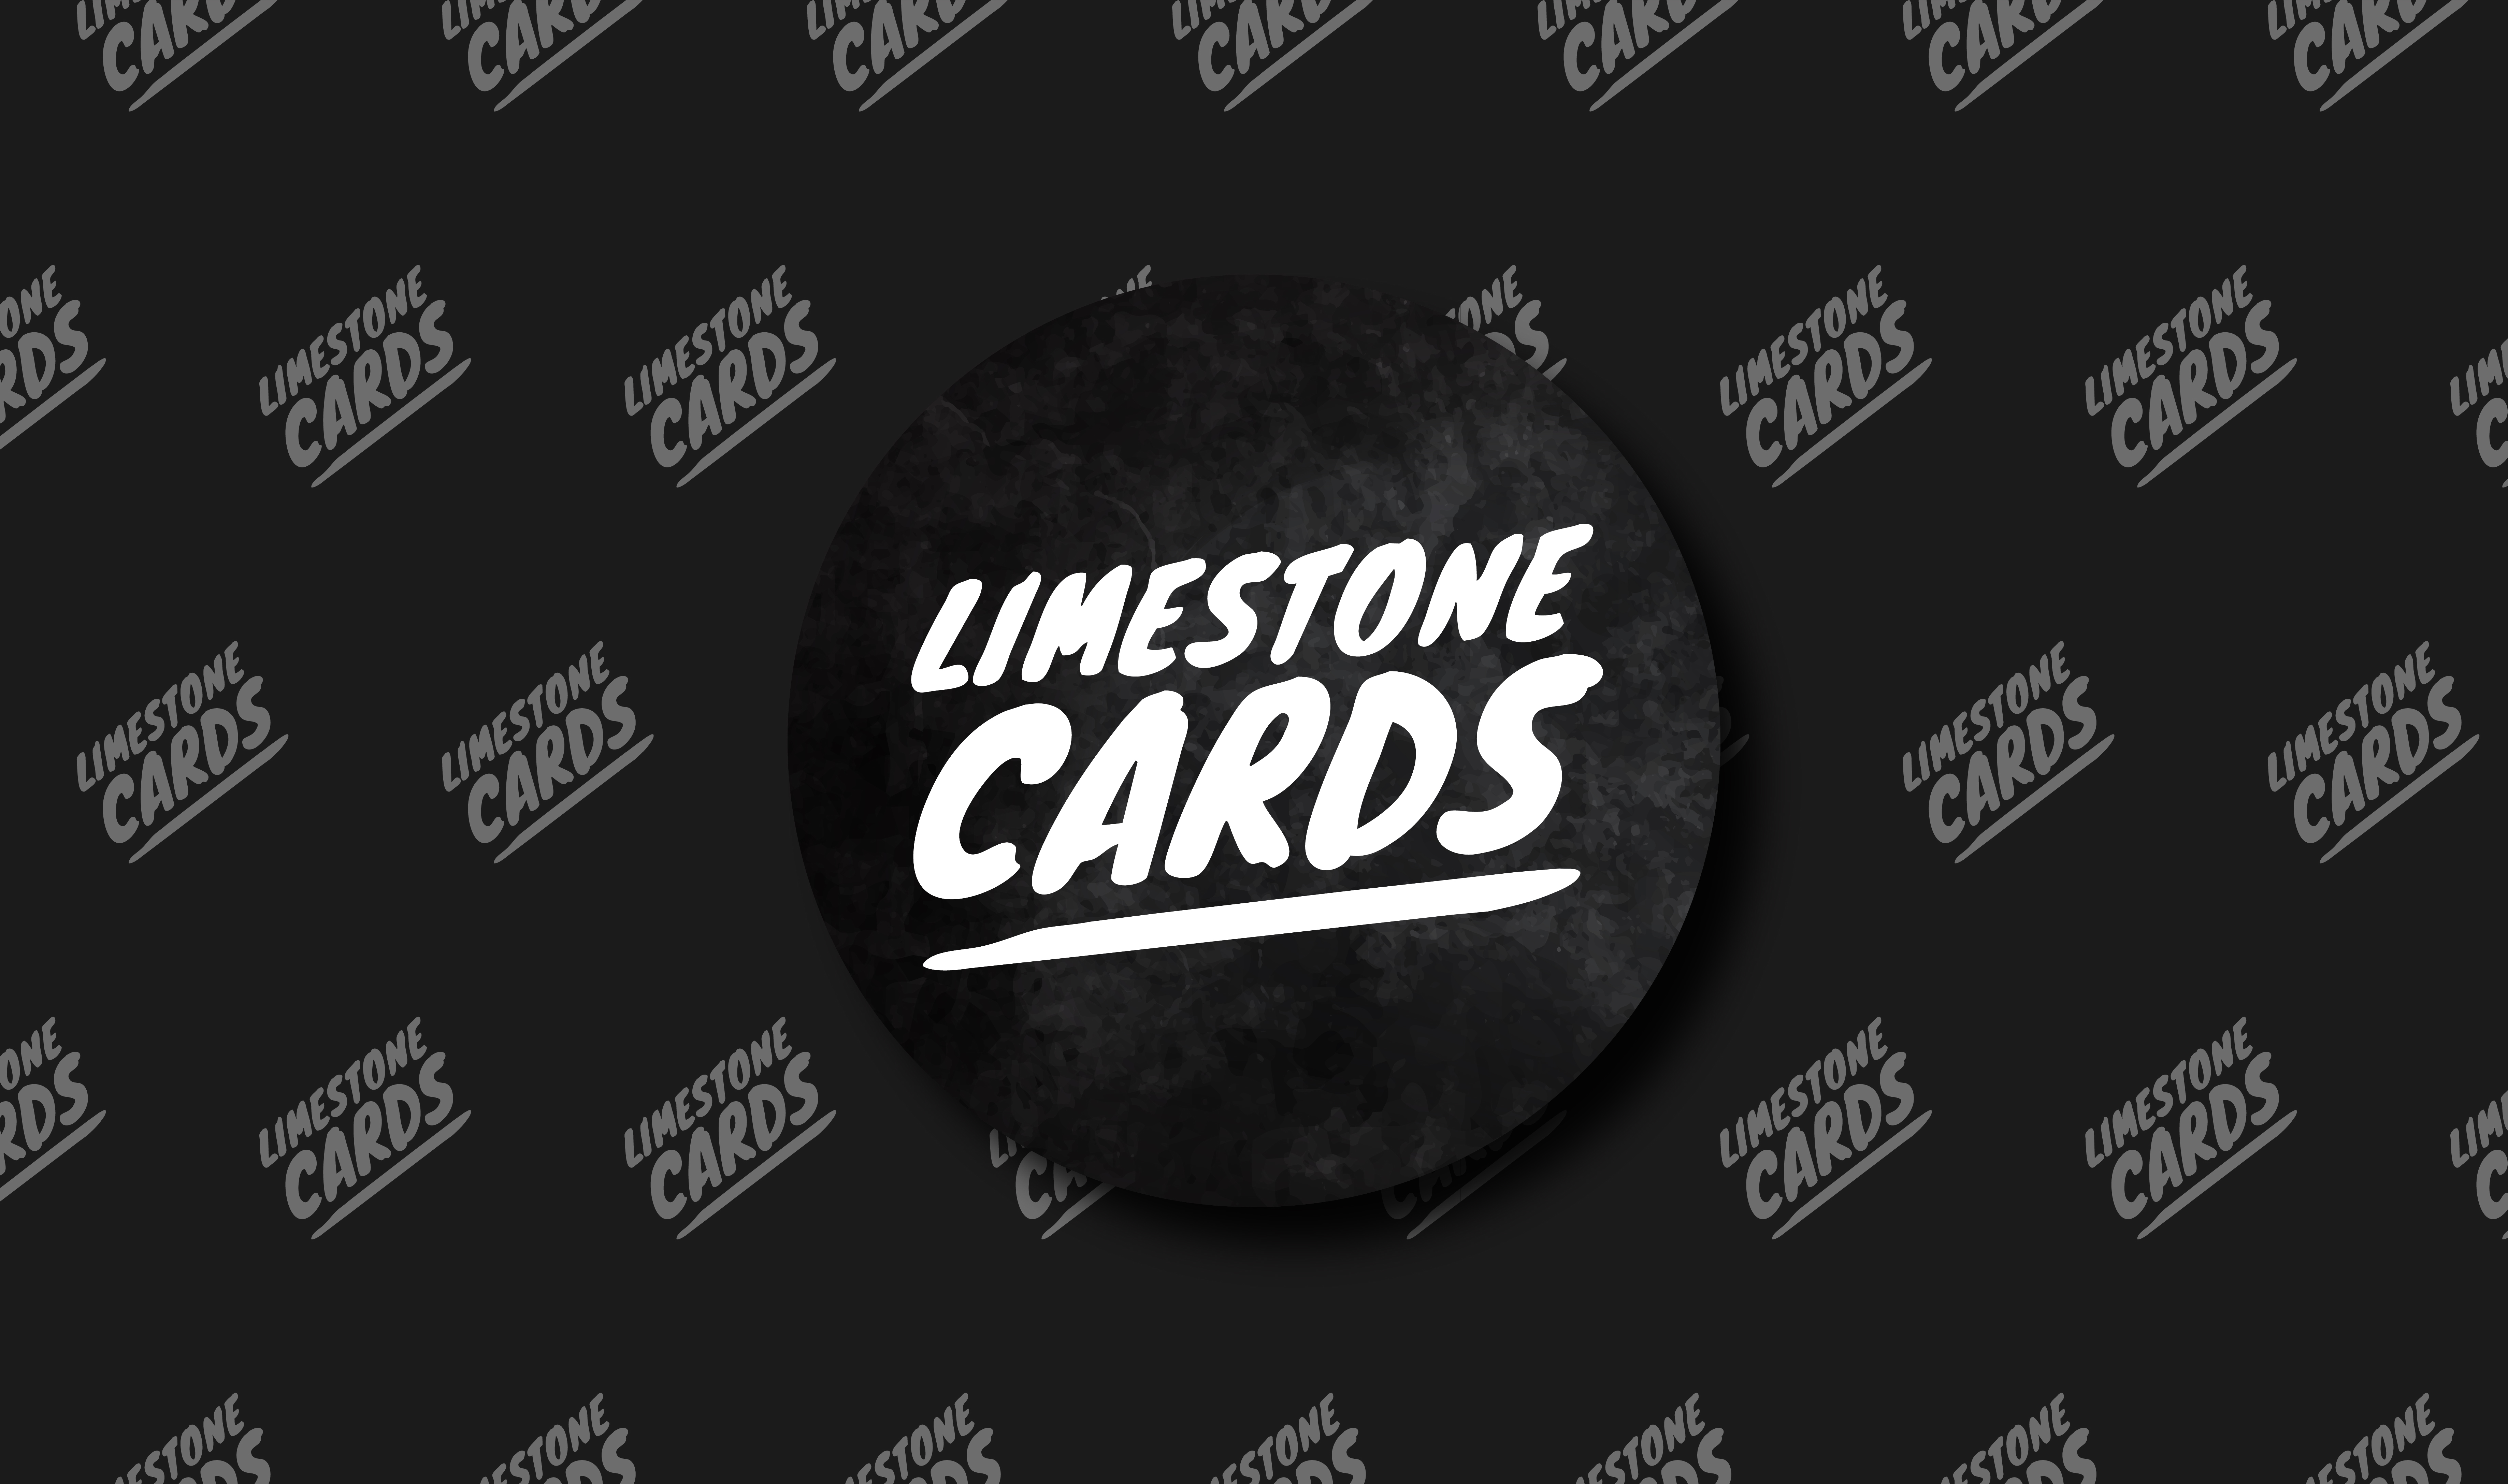 Limestone Cards